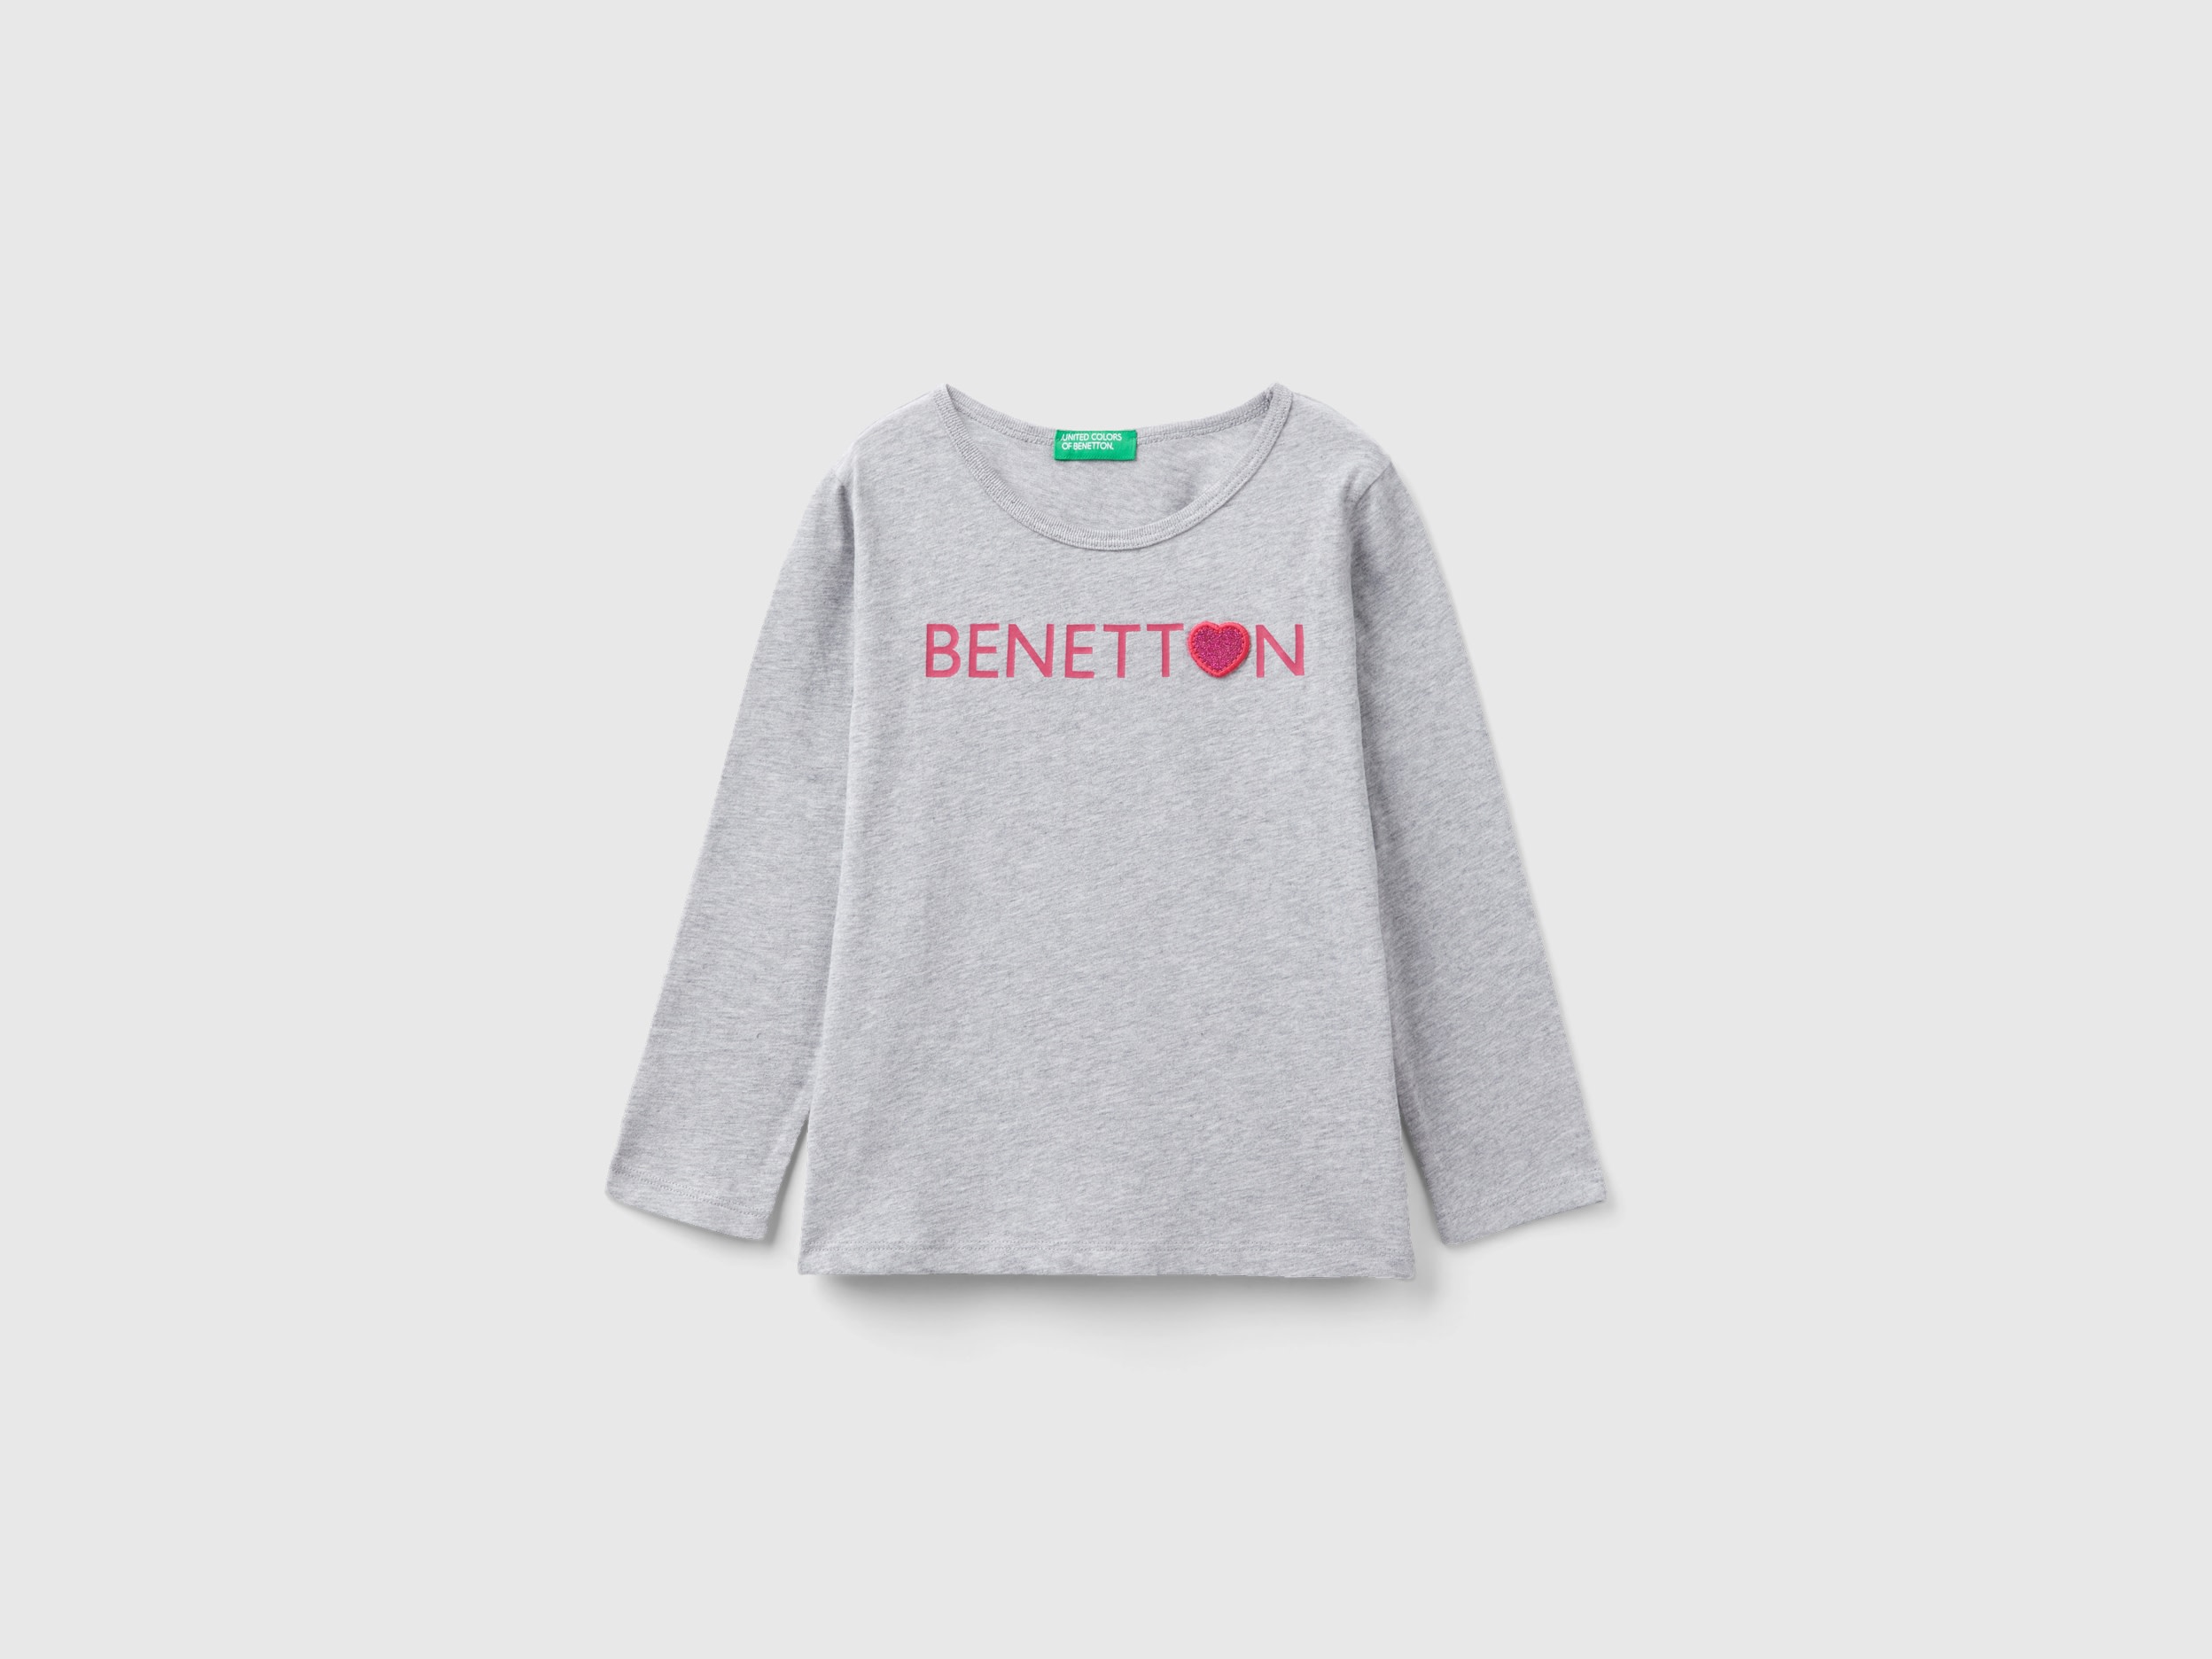 Benetton, Organic Cotton T-shirt With Glittery Print, size 3-4, Light Gray, Kids